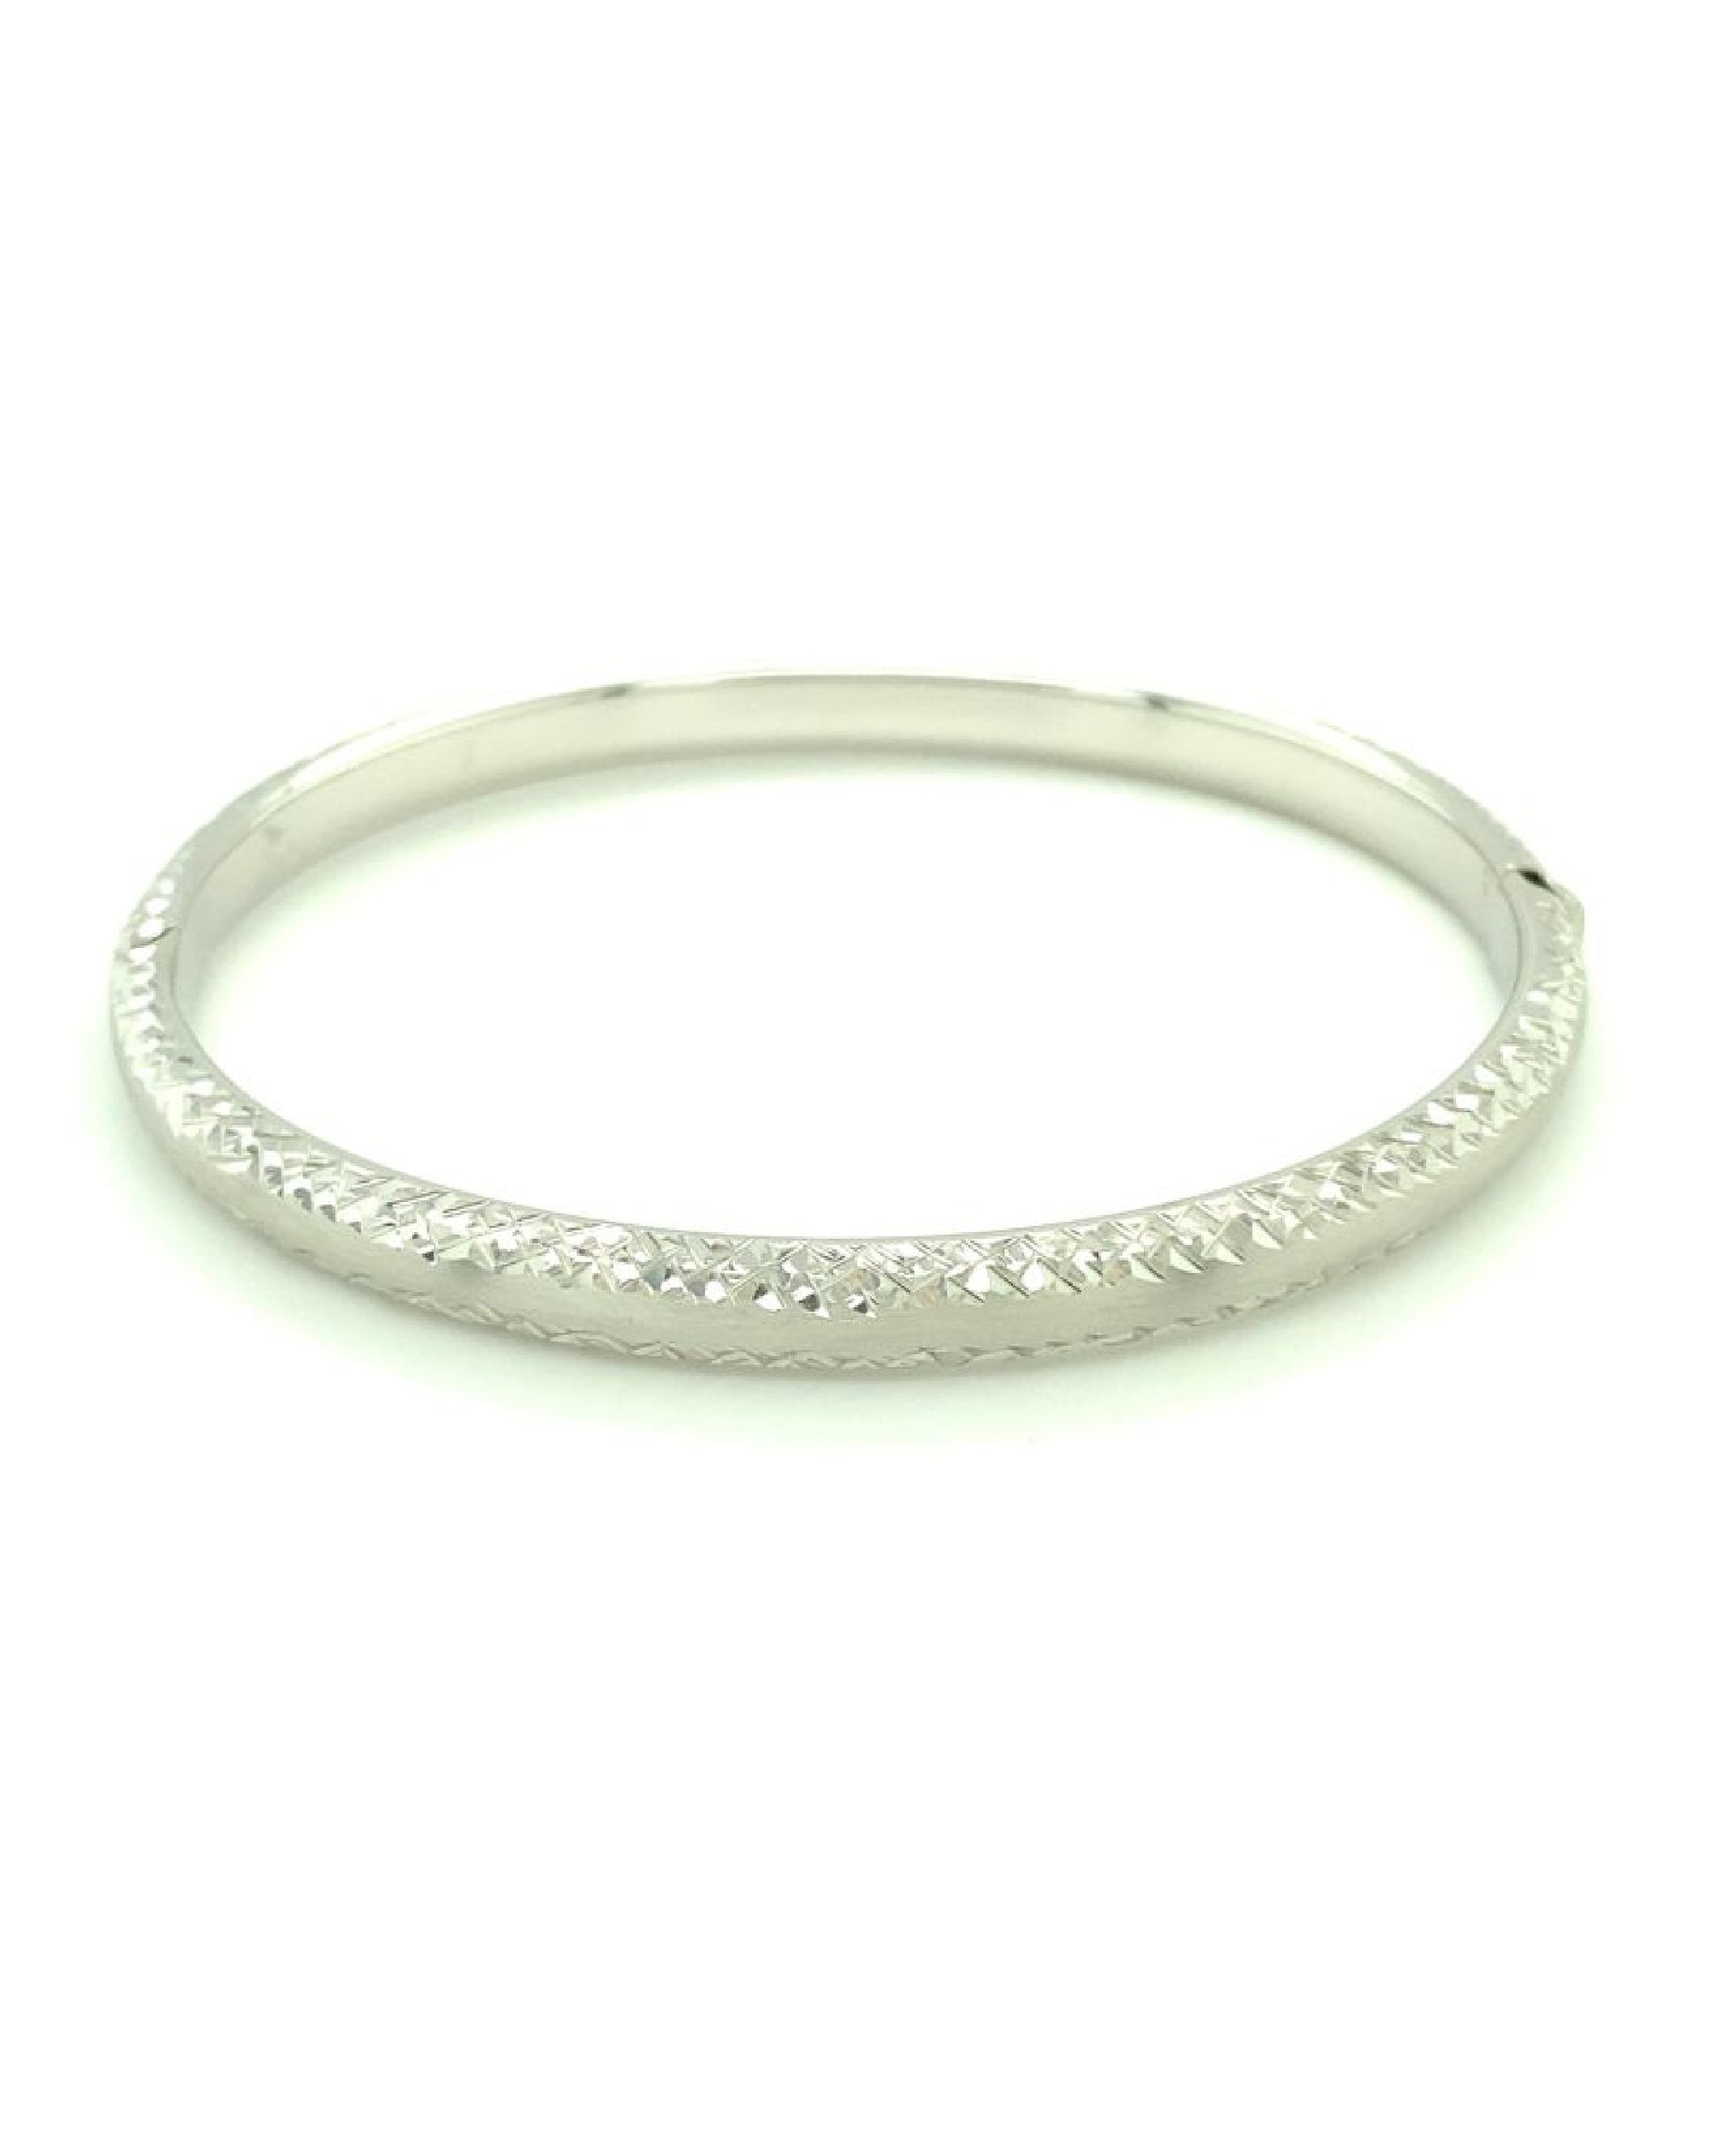 Gold 18 Kt White Gold Bangle With Diamond Cut Design Jewelry